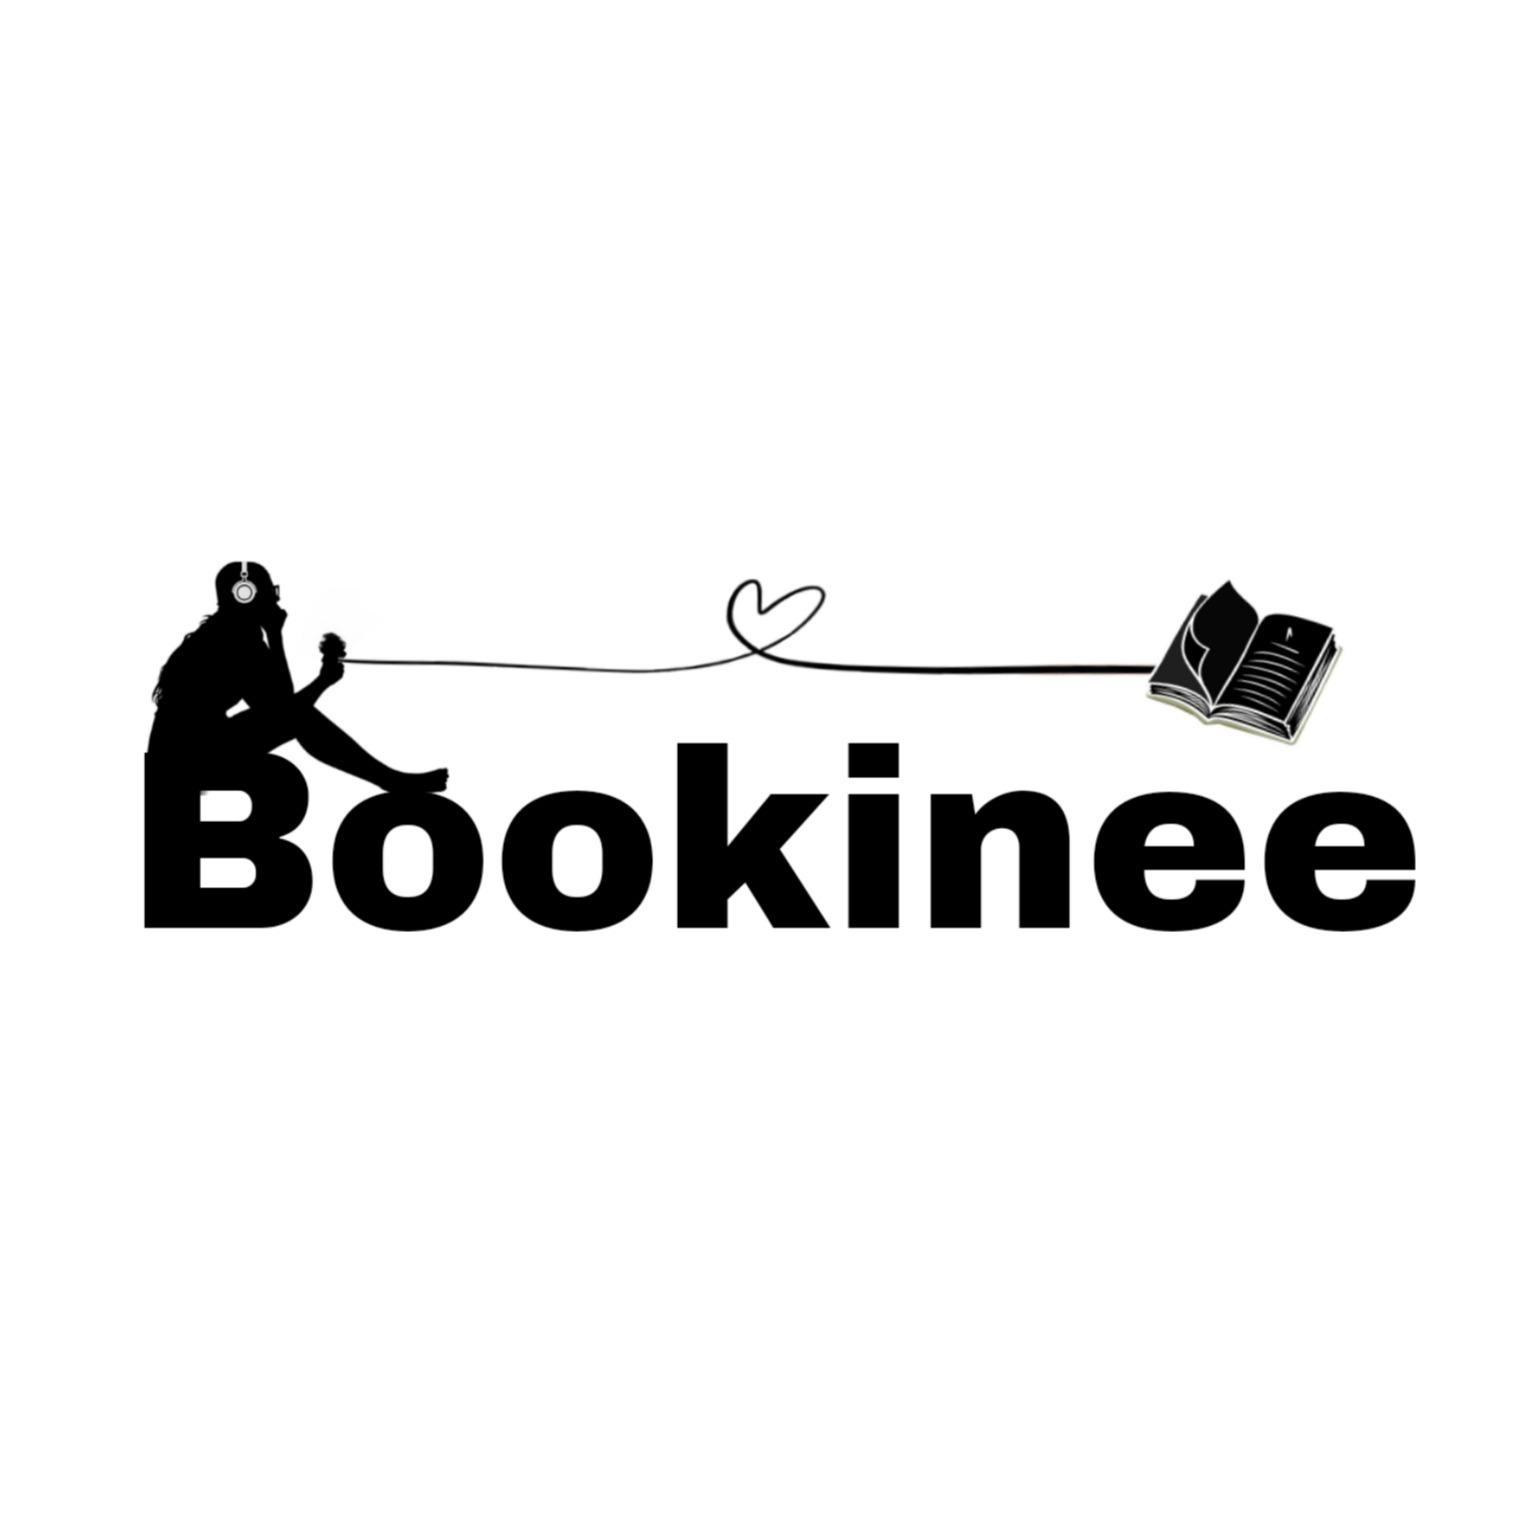 Bookinee